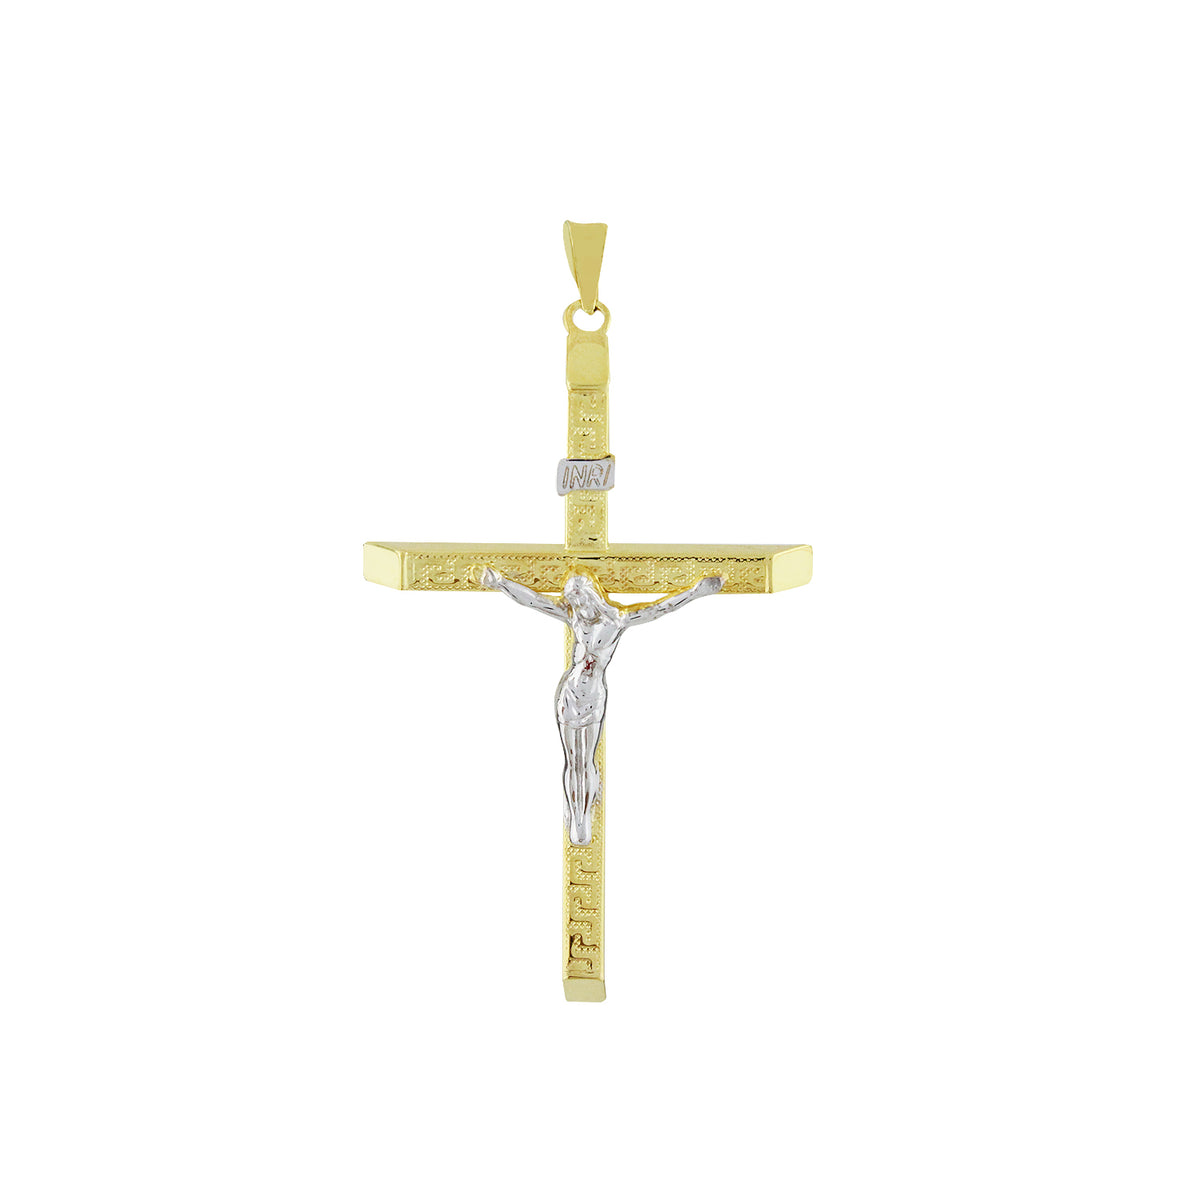 18K Saudi Gold Necklace with Holy Face Pendant – Royal Gem